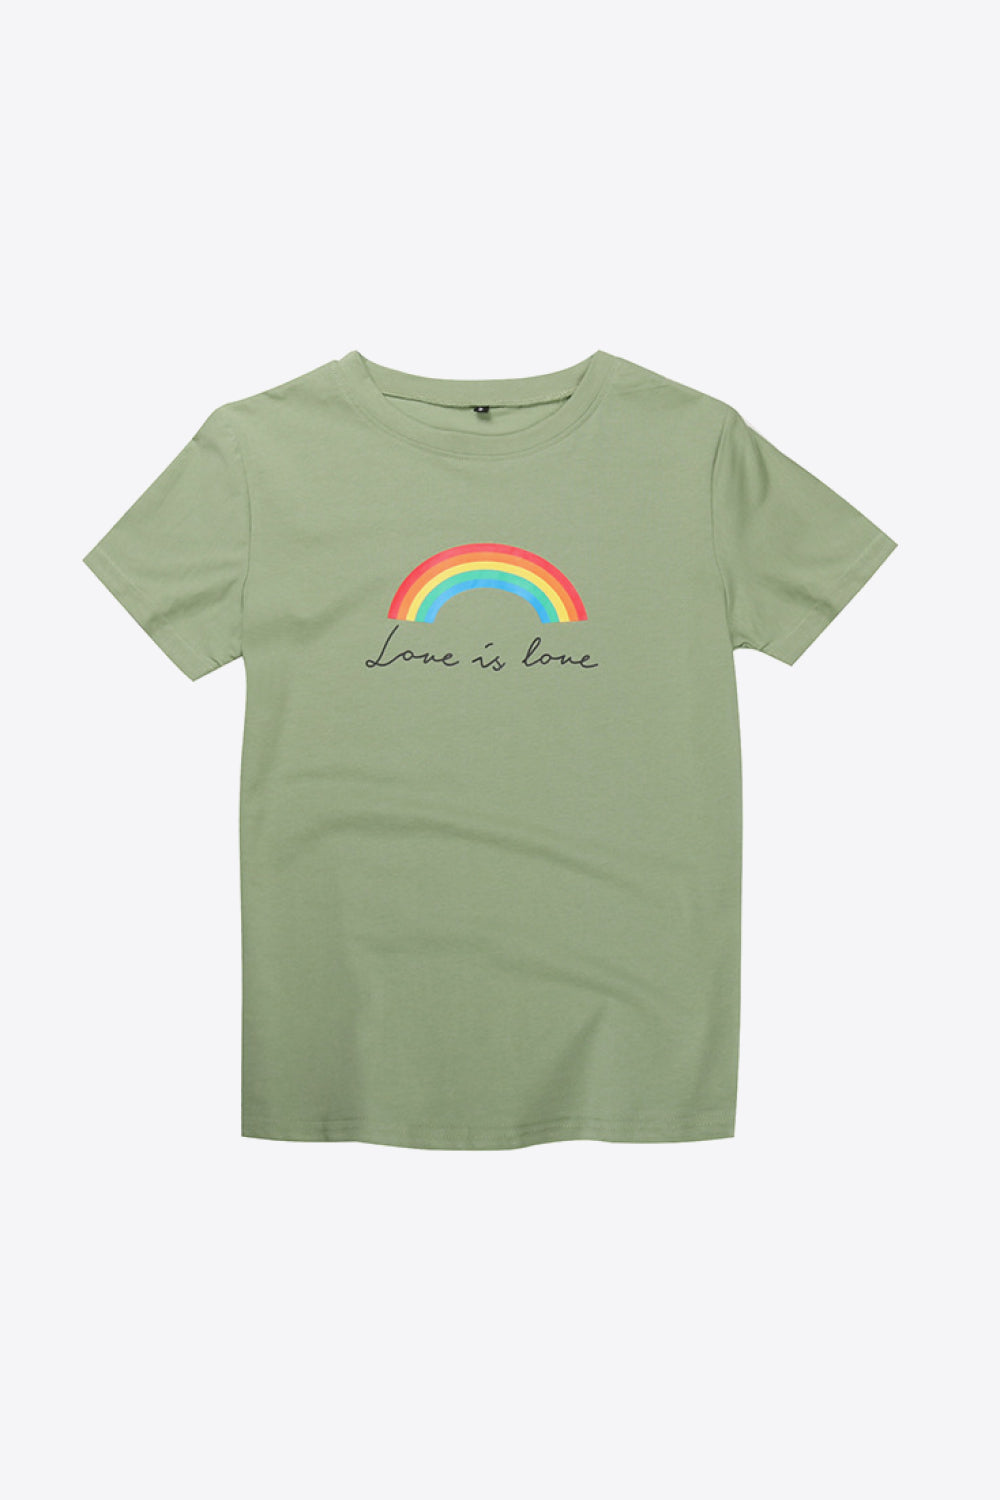 LOVE IS LOVE Rainbow Graphic Tee Shirt - Dash Trend